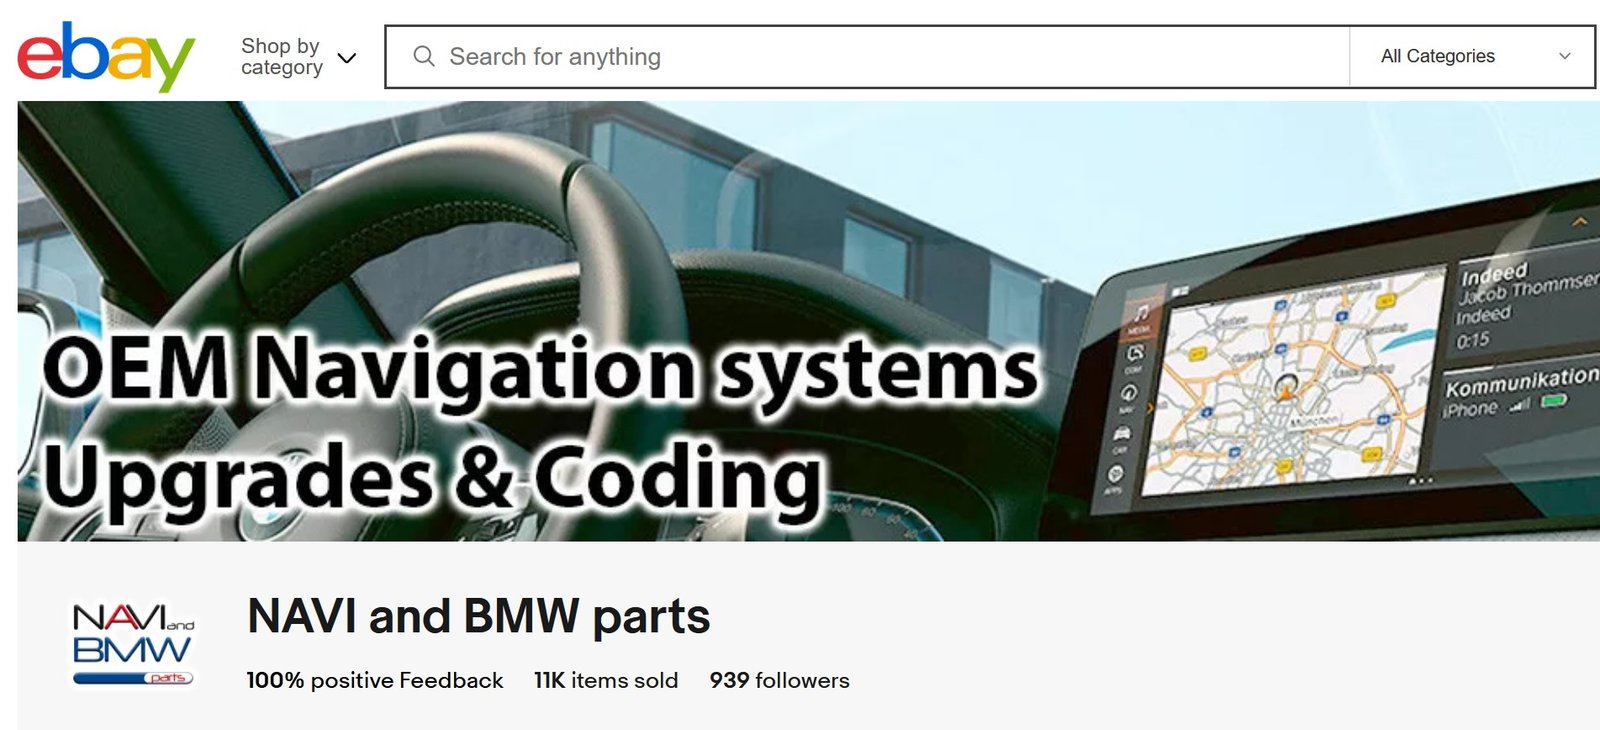 Navi AND BMW parts Ebay shop information